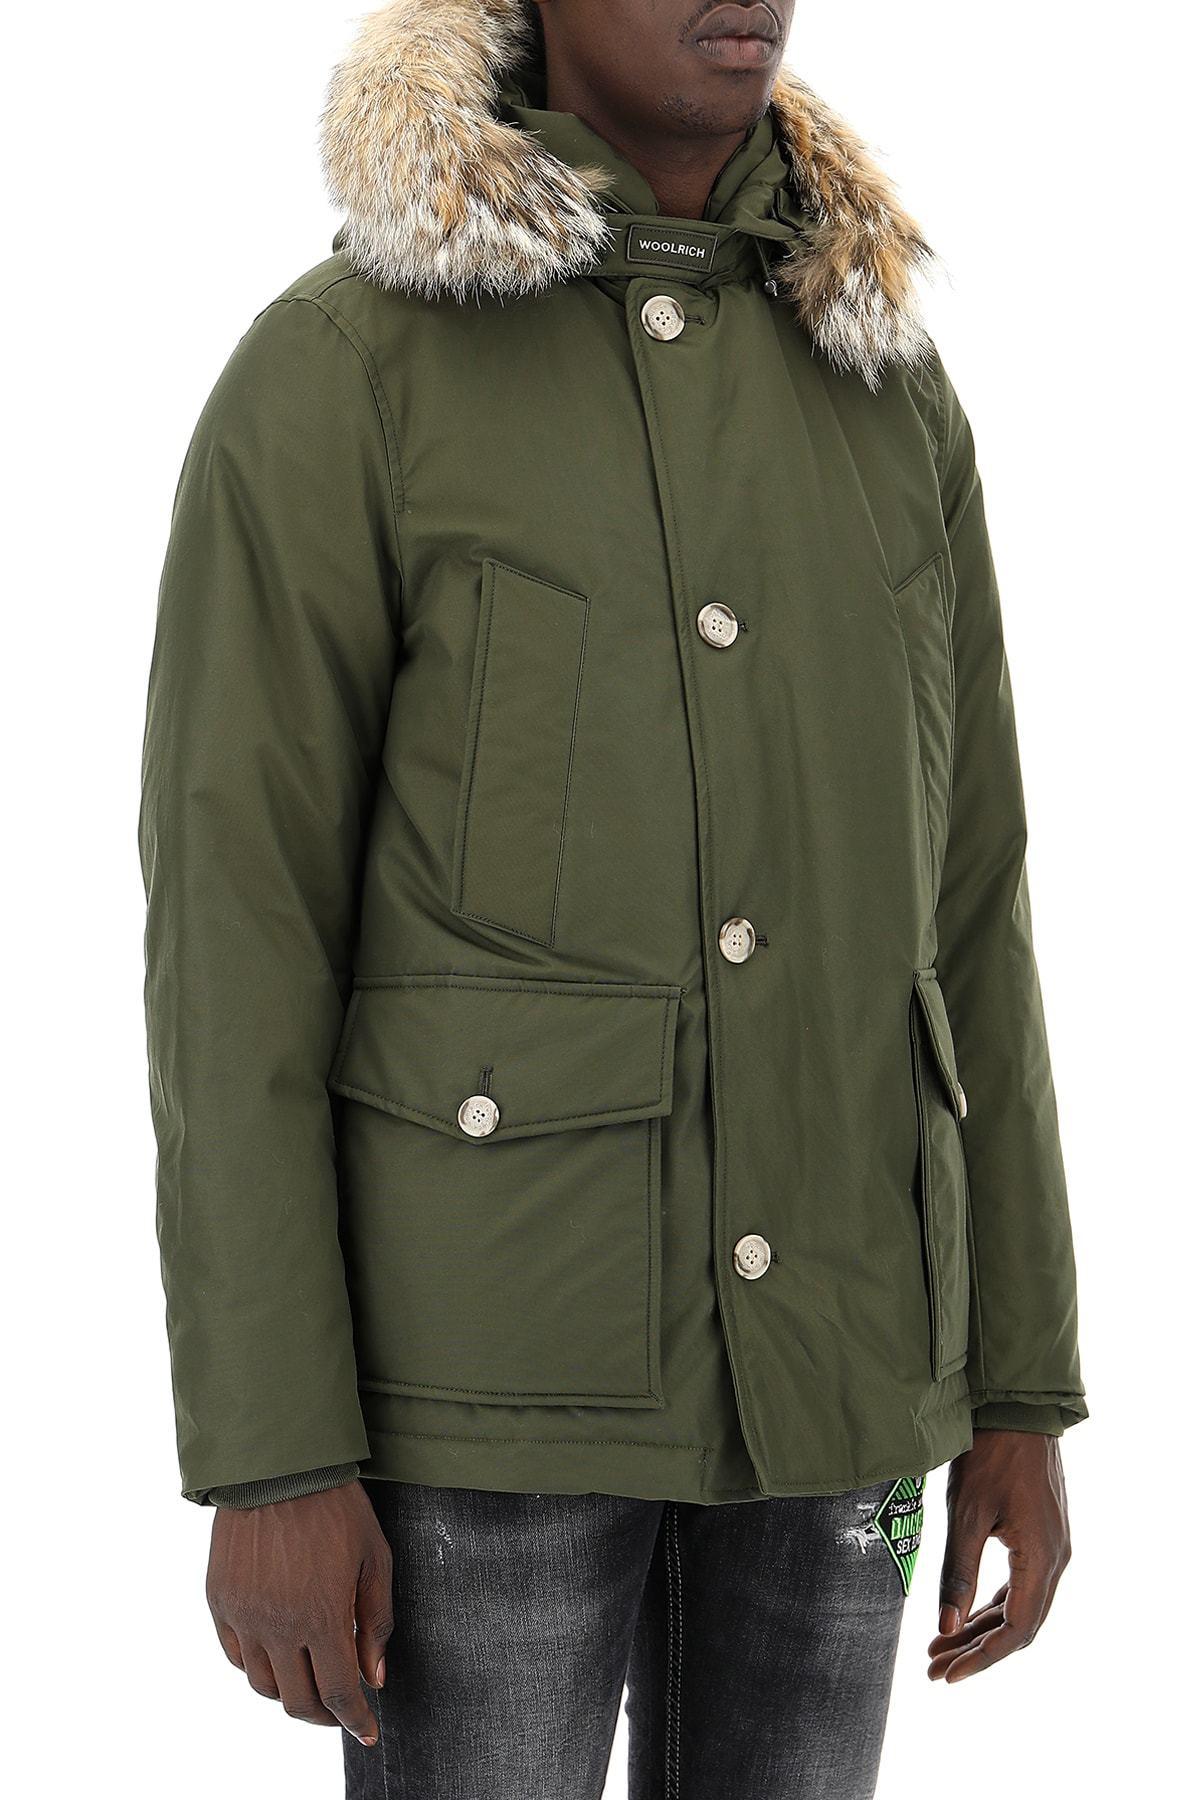 Woolrich Cotton Arctic Anorak Down Coat in Green for Men - Lyst